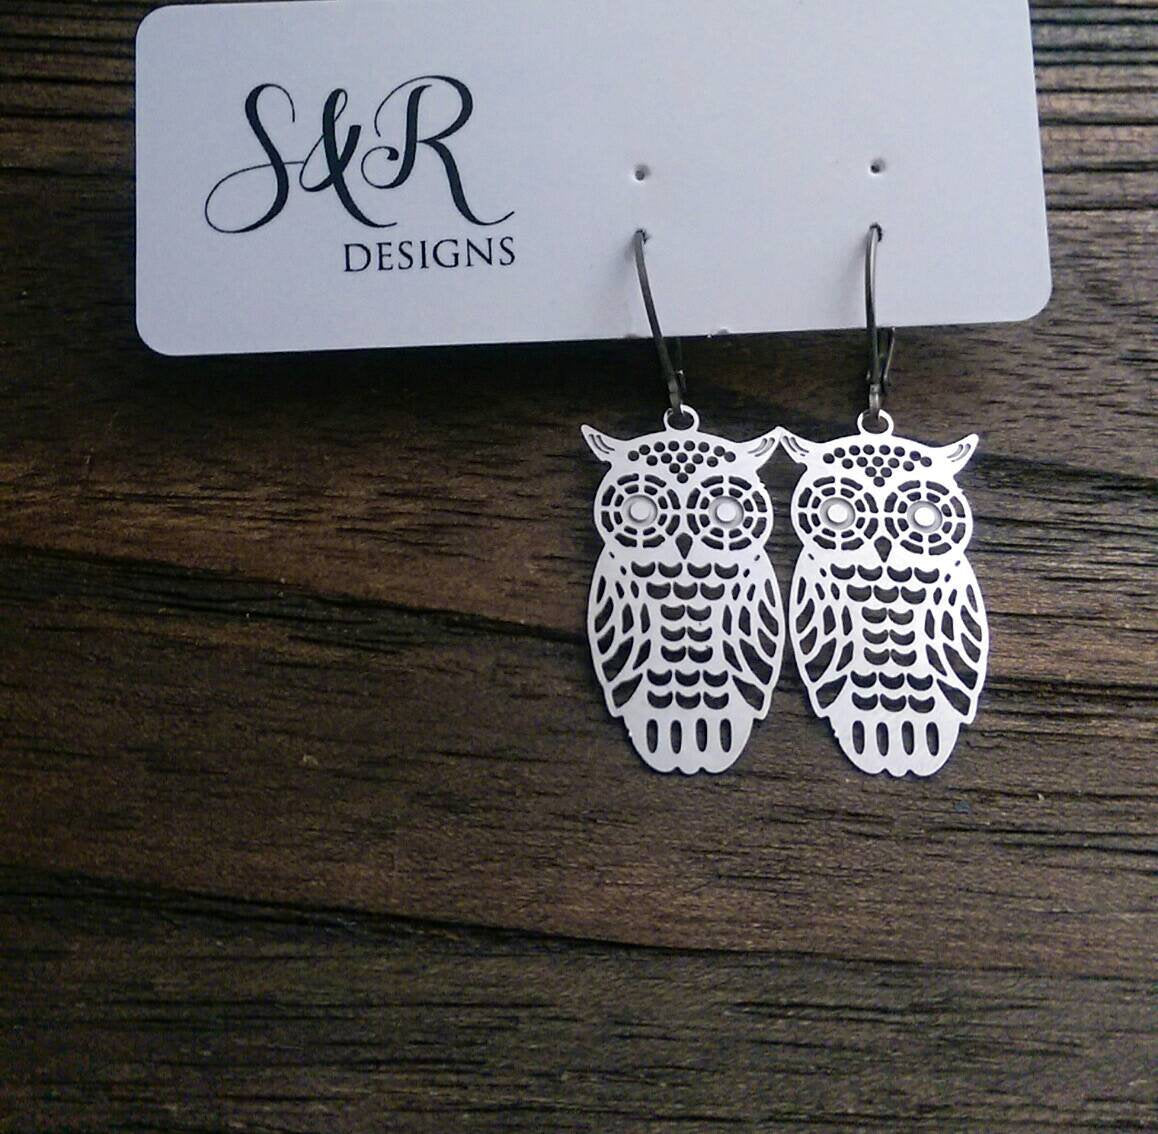 Owl Filigree Silver Stainless Steel Dangle Leverback or Hook Earrings.